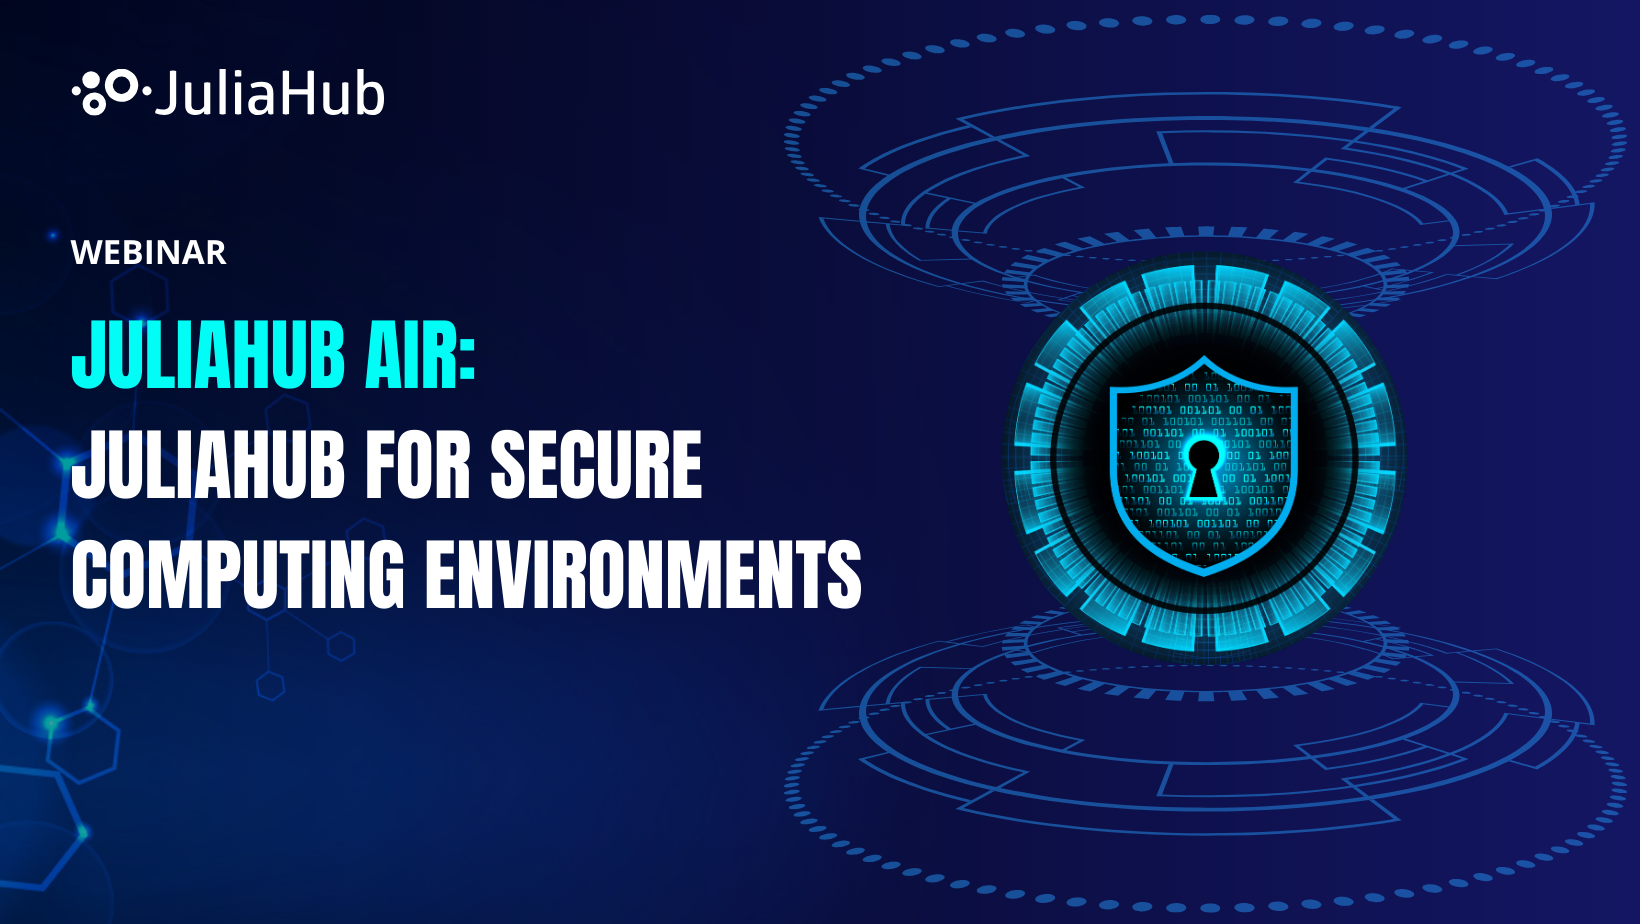 JuliaHub Air - Secure Computing Environments for Sensitive Projects